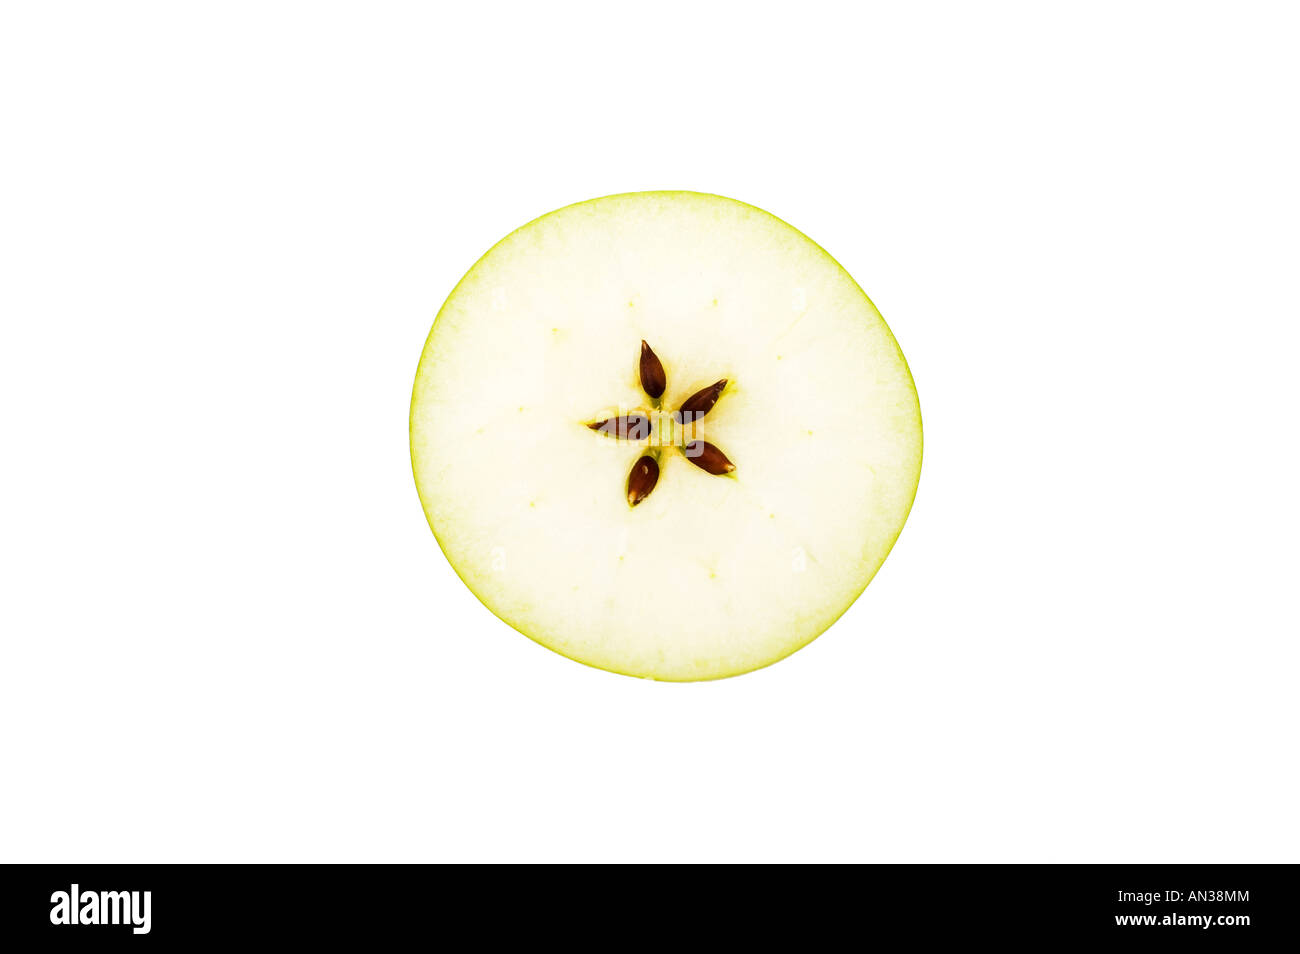 christmas motive cross section of green apple on white background Stock Photo